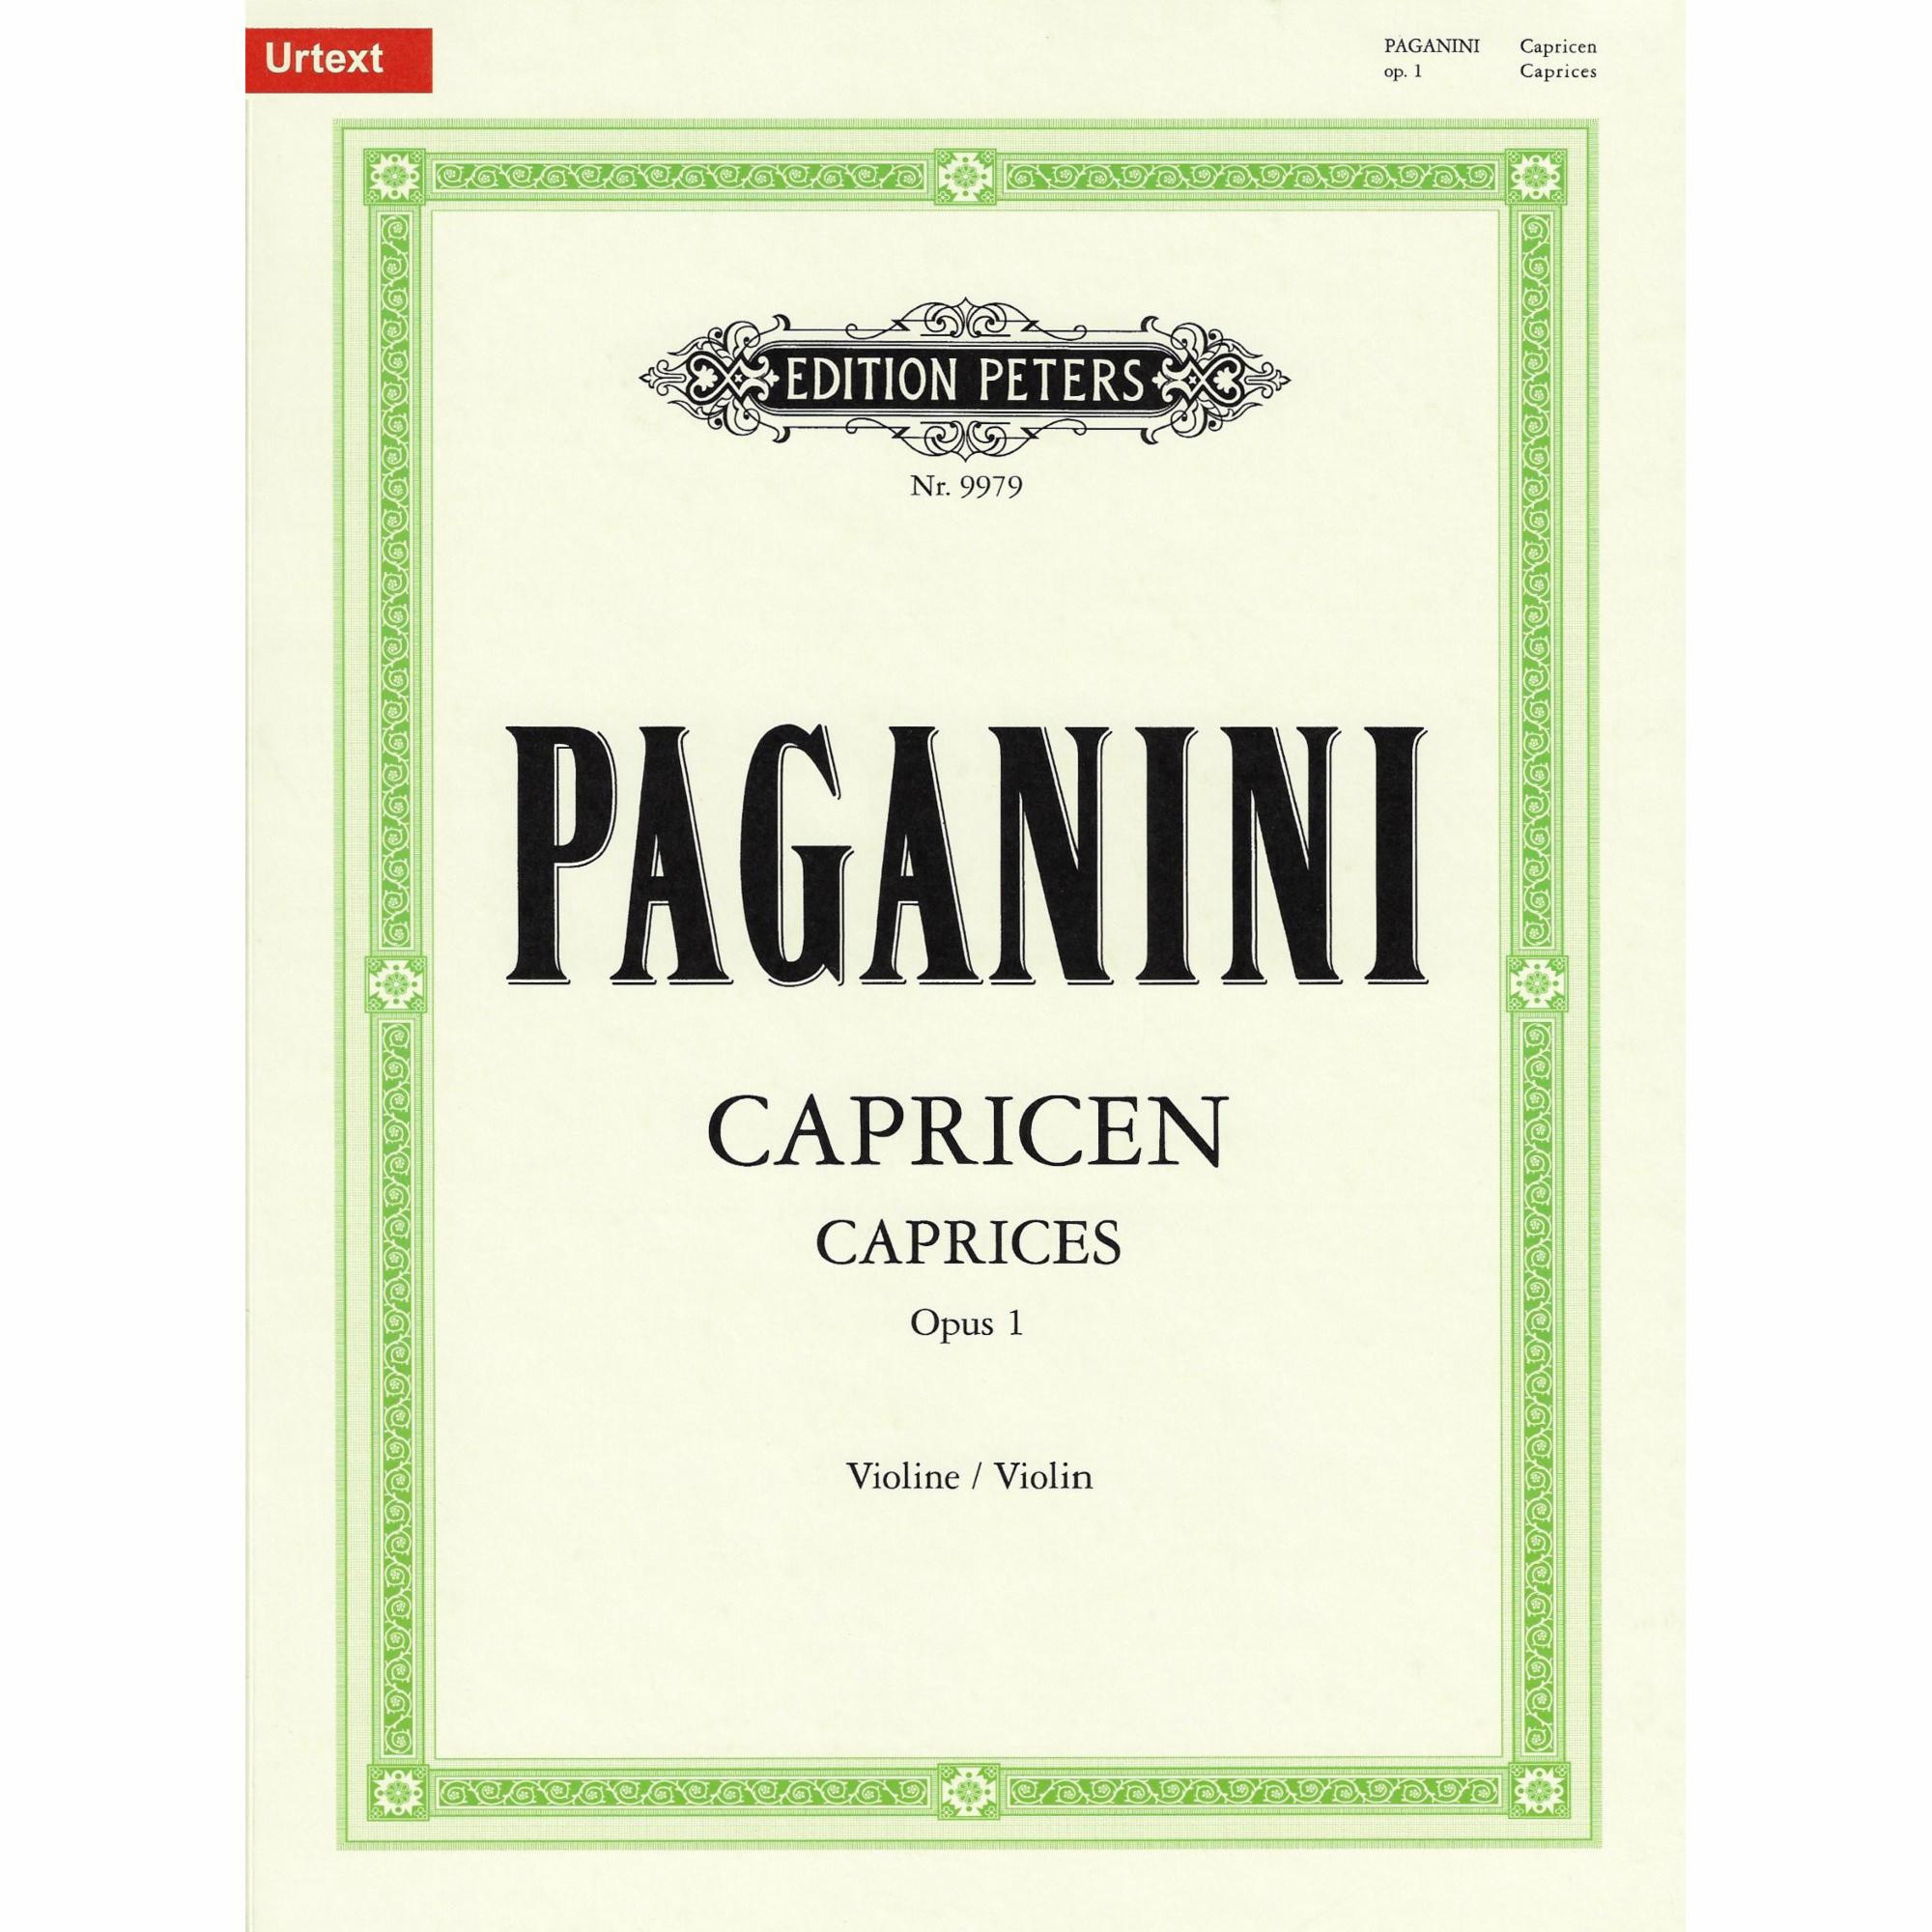 Paganini -- Caprices, Op. 1 for Solo Violin